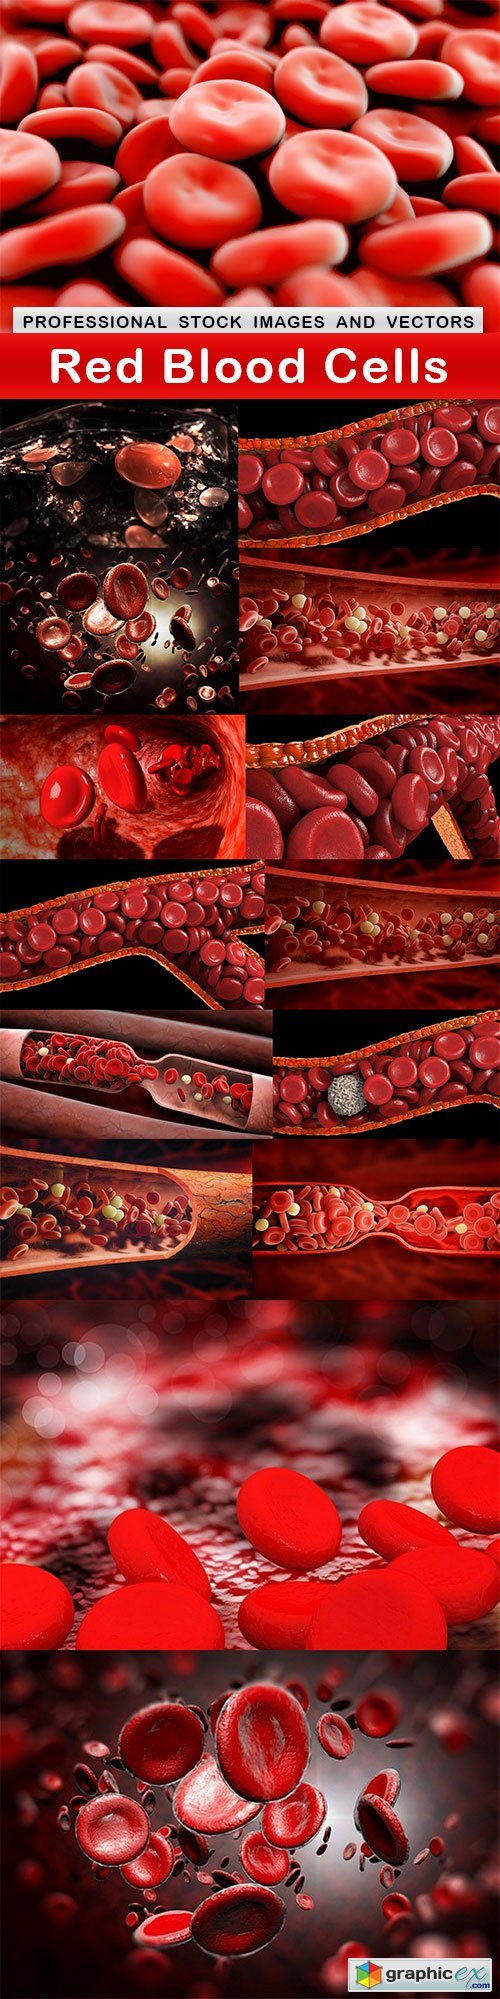 Red Blood Cells - 15 UHQ JPEG